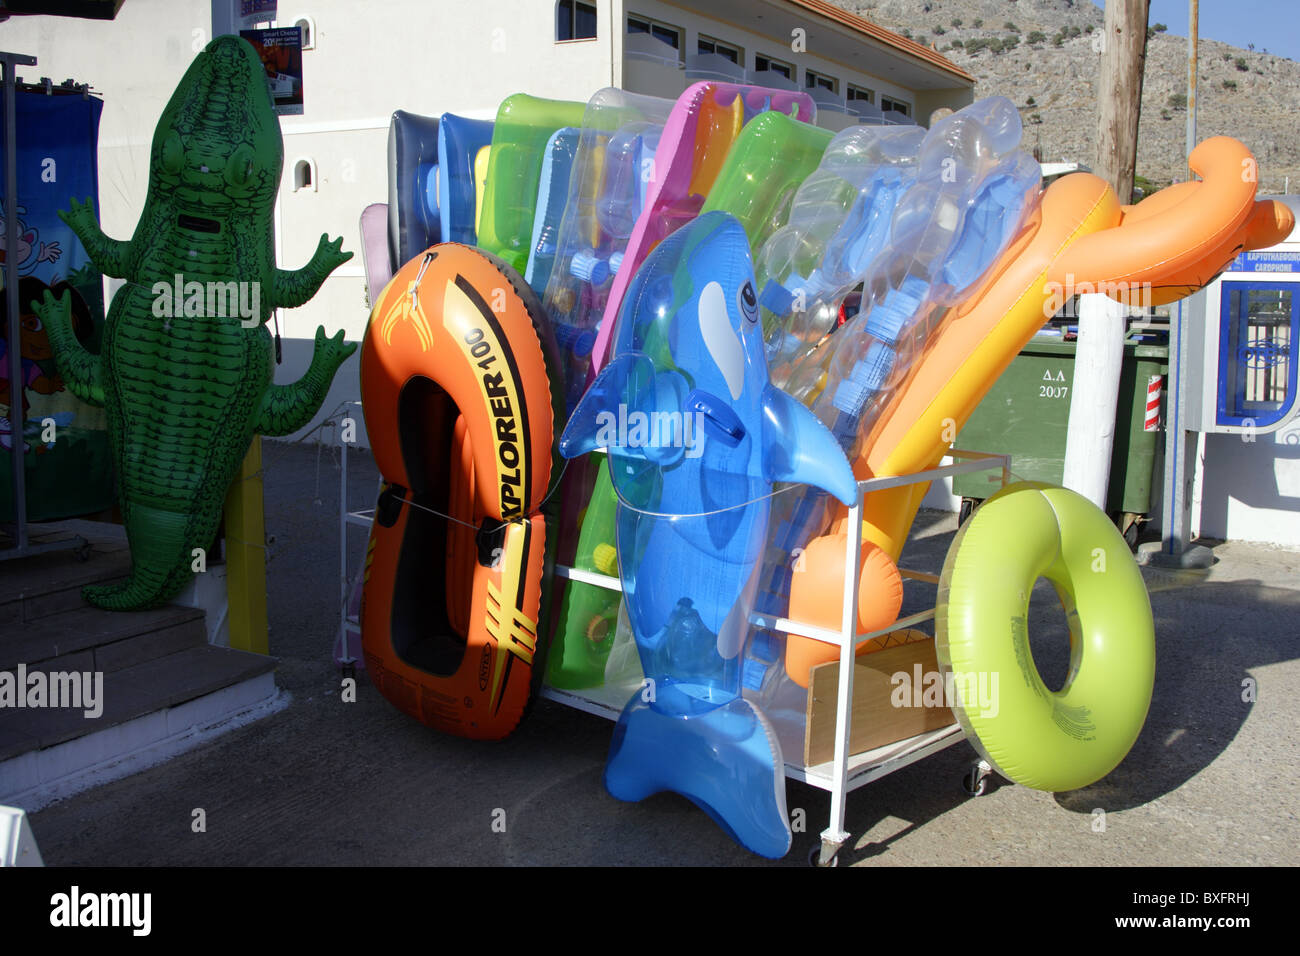 Tourist shop selling inflatables in Lothiarika, near Lardos, Rhodes, Greece Stock Photo